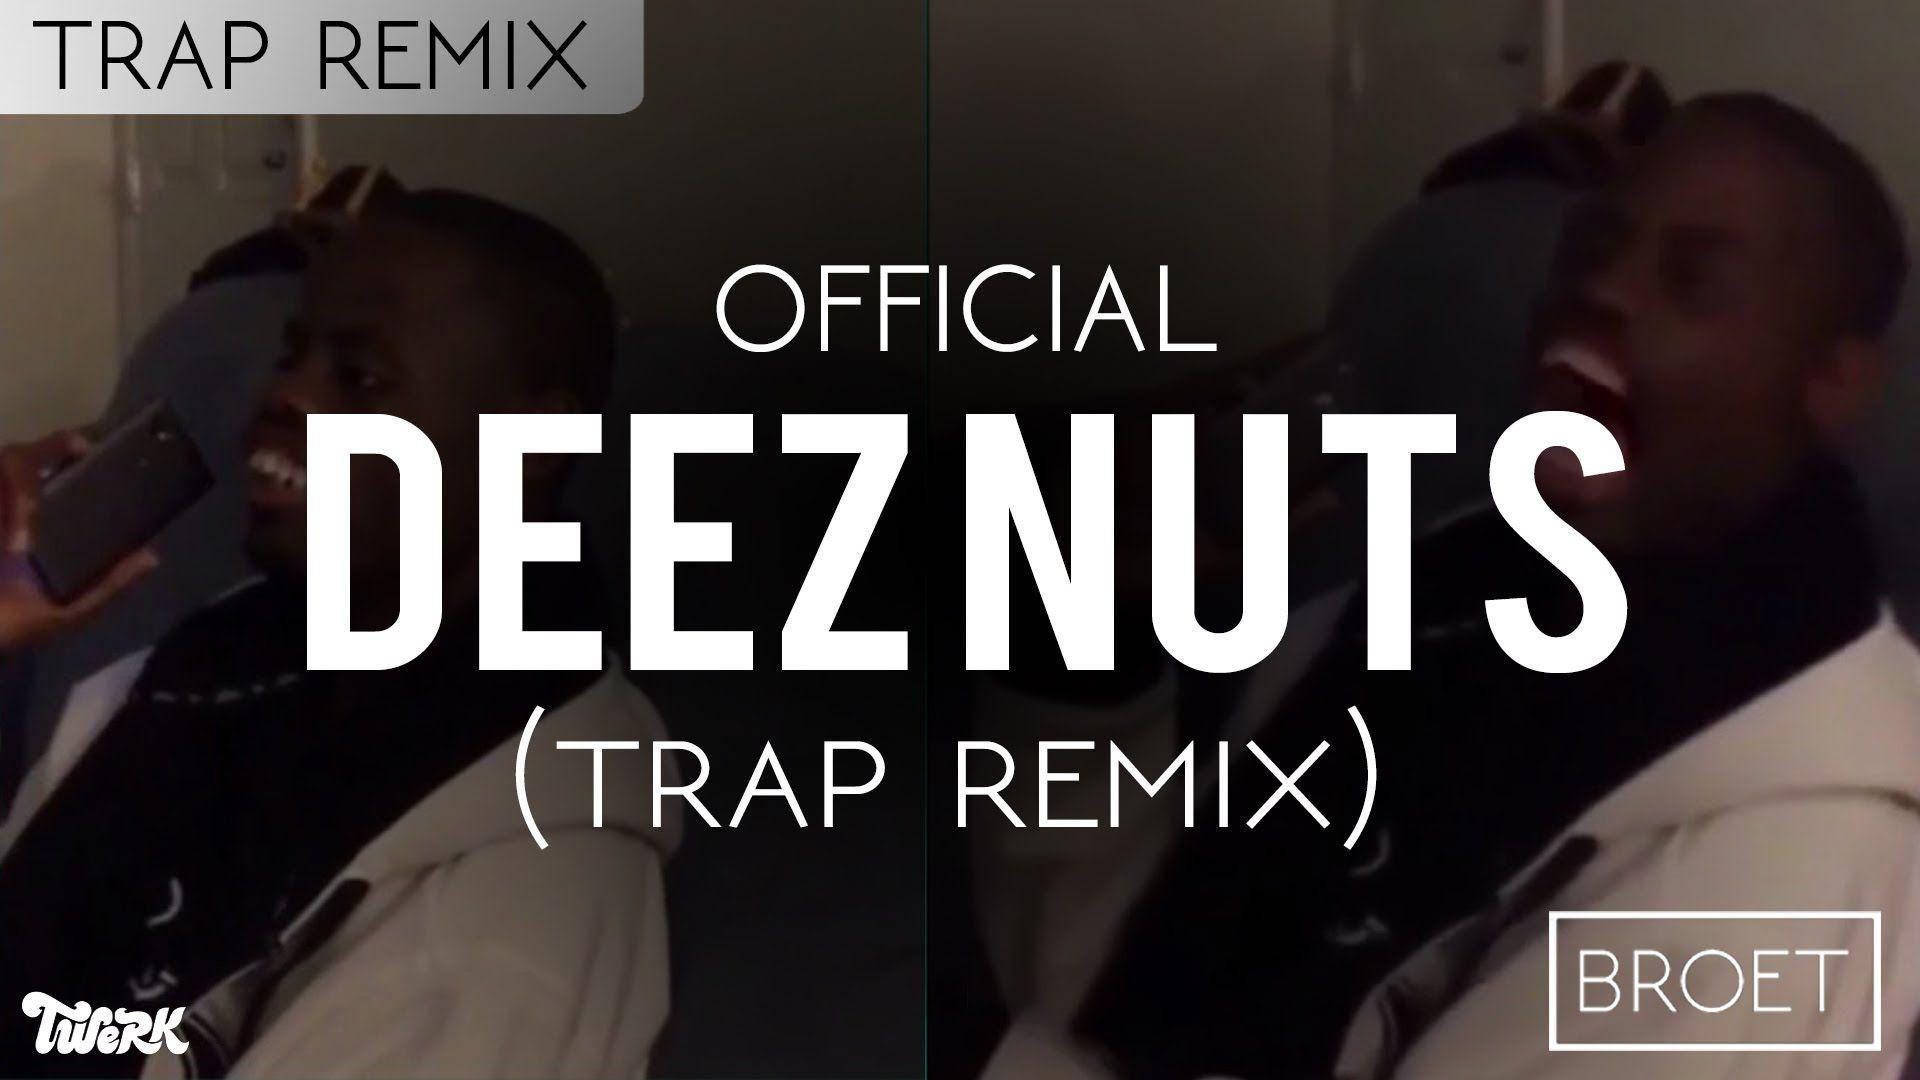 Deez Nuts Trap Remix Poster Wallpaper